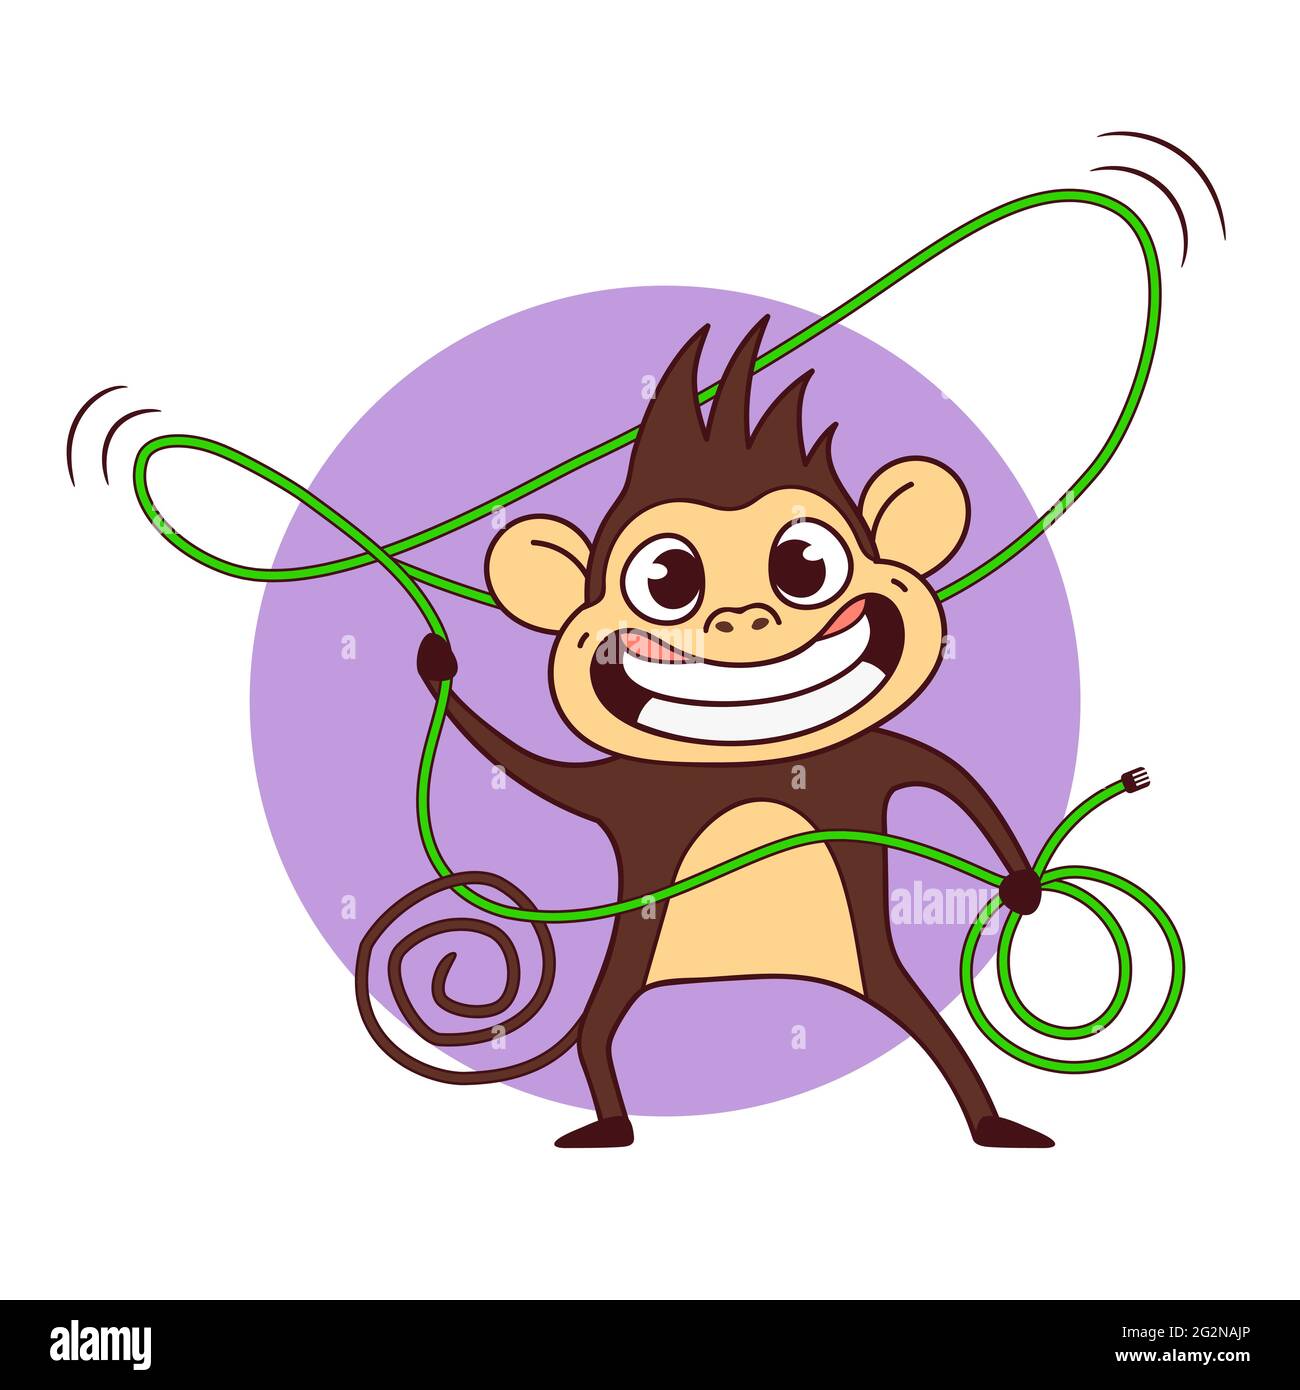 Сute cartoon monkey vector illustration. Crazy monkey with network cable Stock Vector